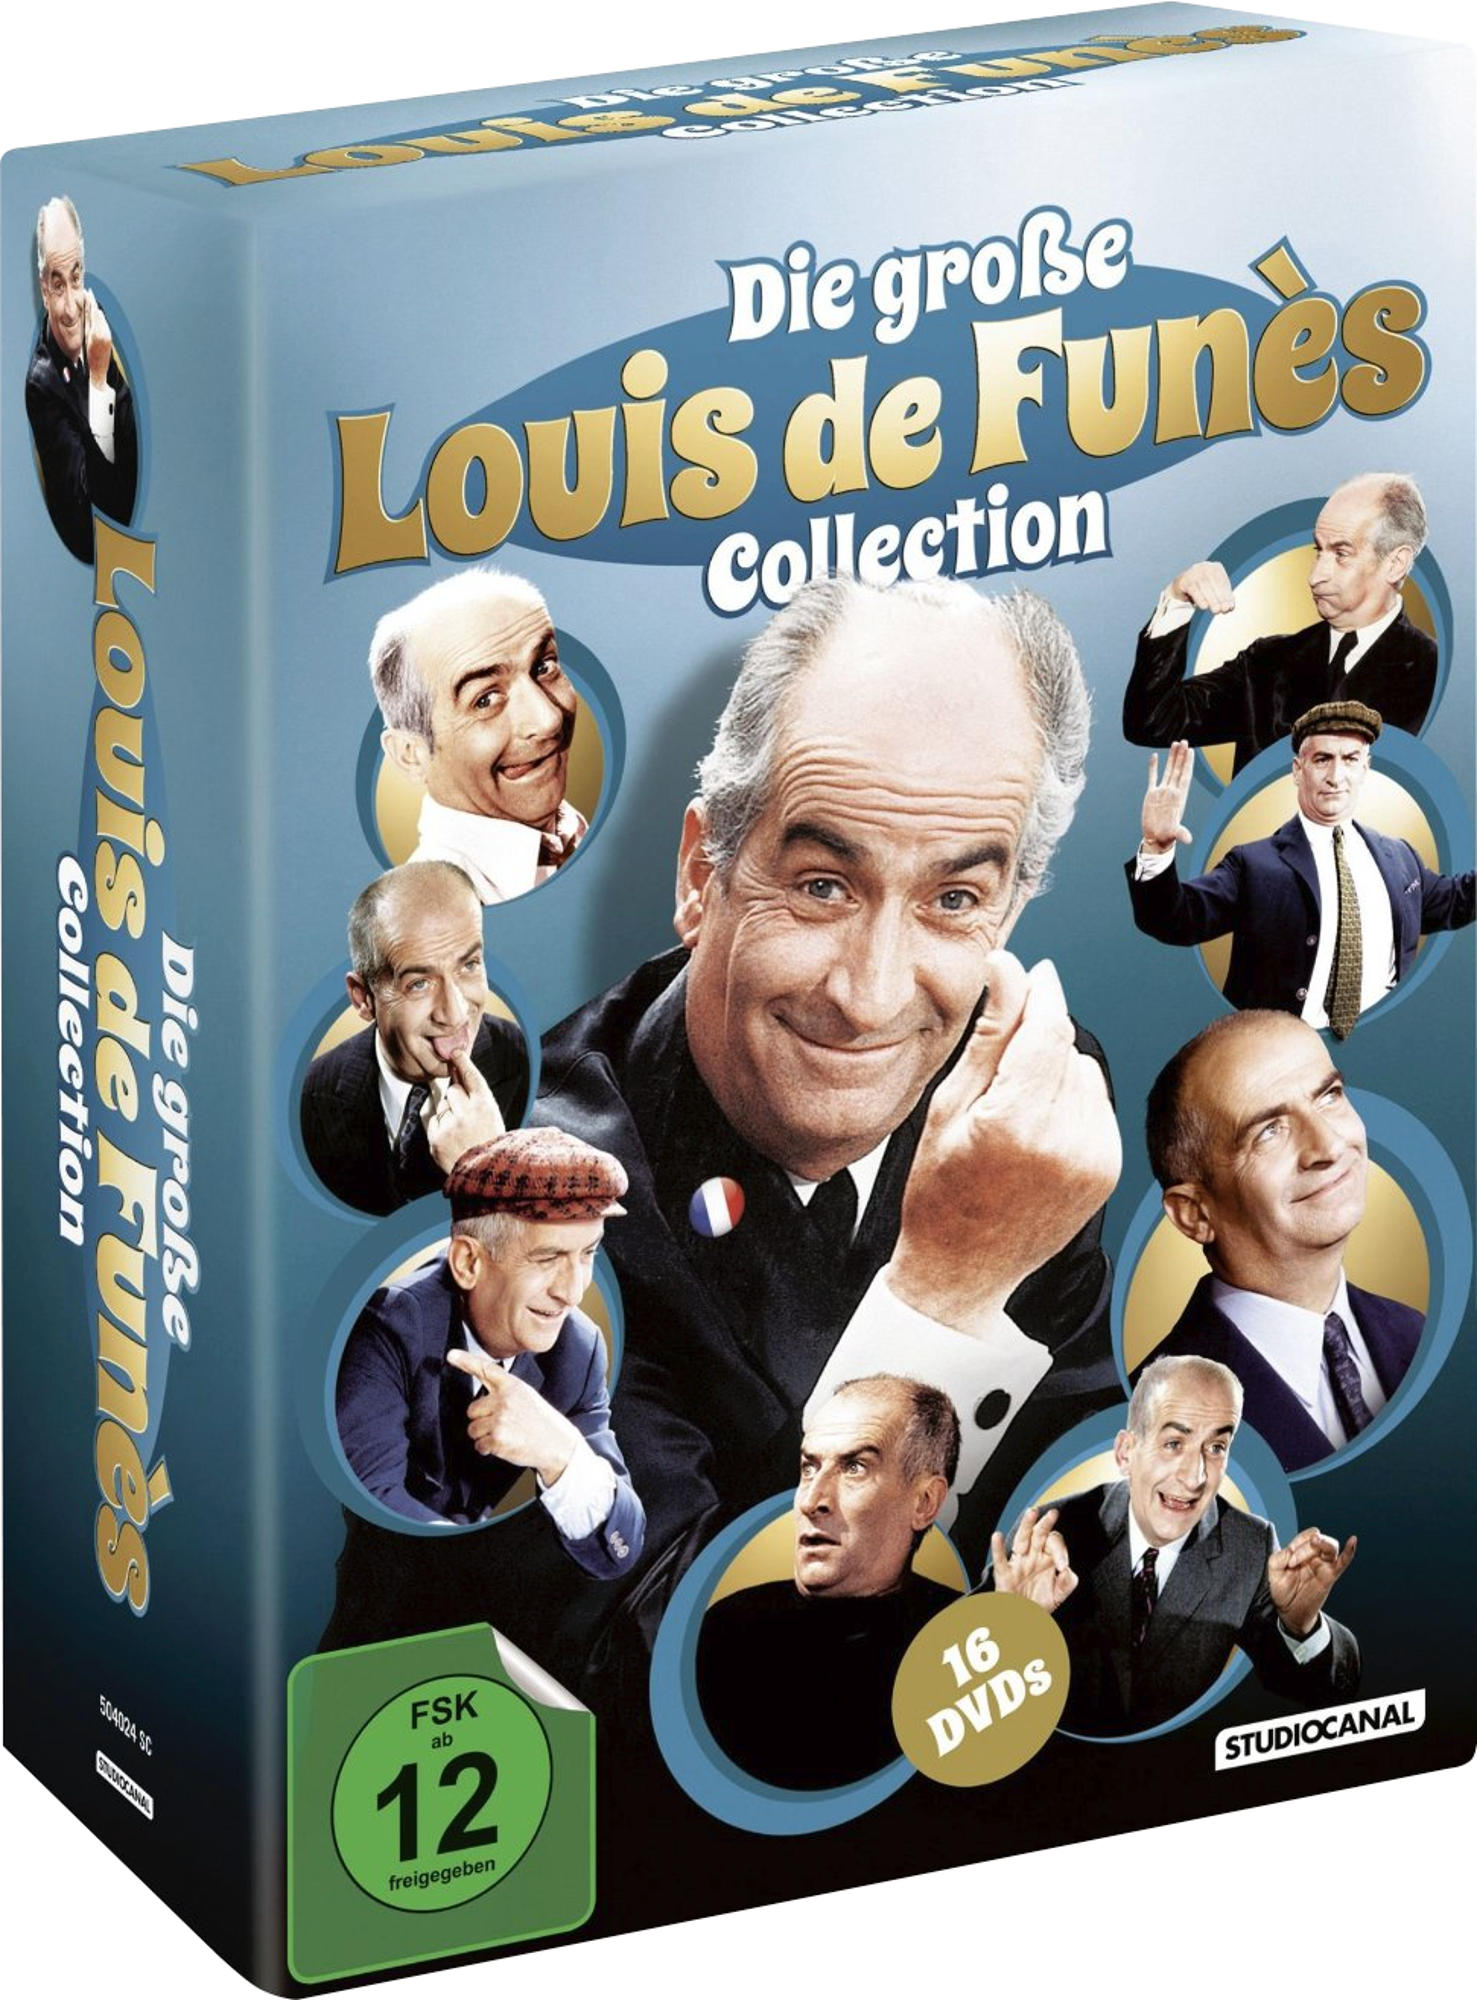 Louis de DVD Funes Collection